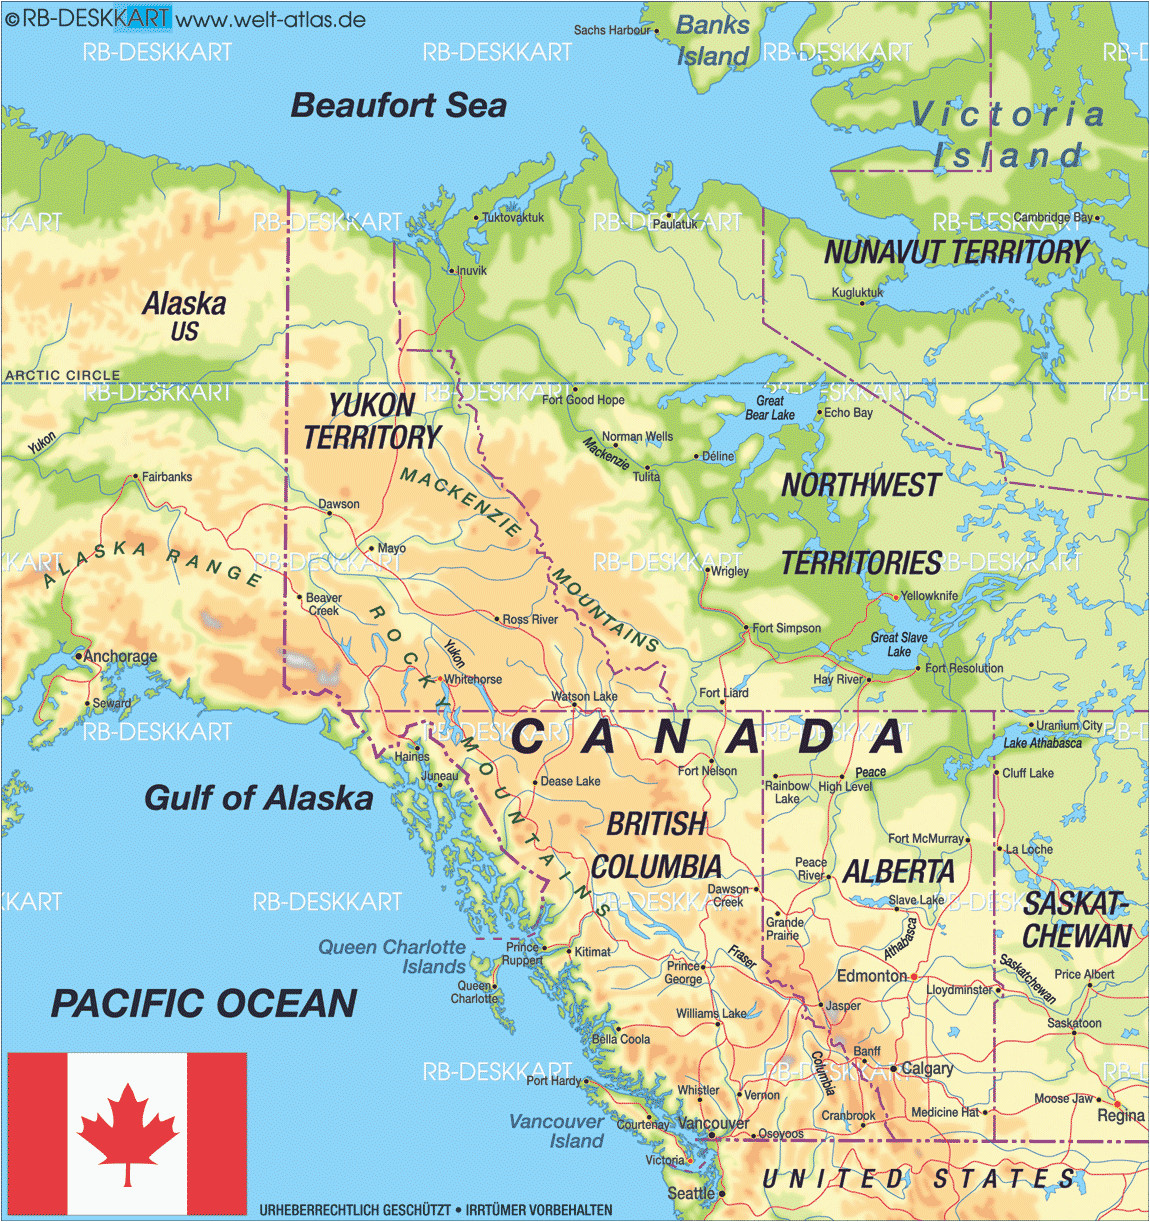 Map Of Western Canada and Alaska Map Of Canada West Region In Canada Welt atlas De